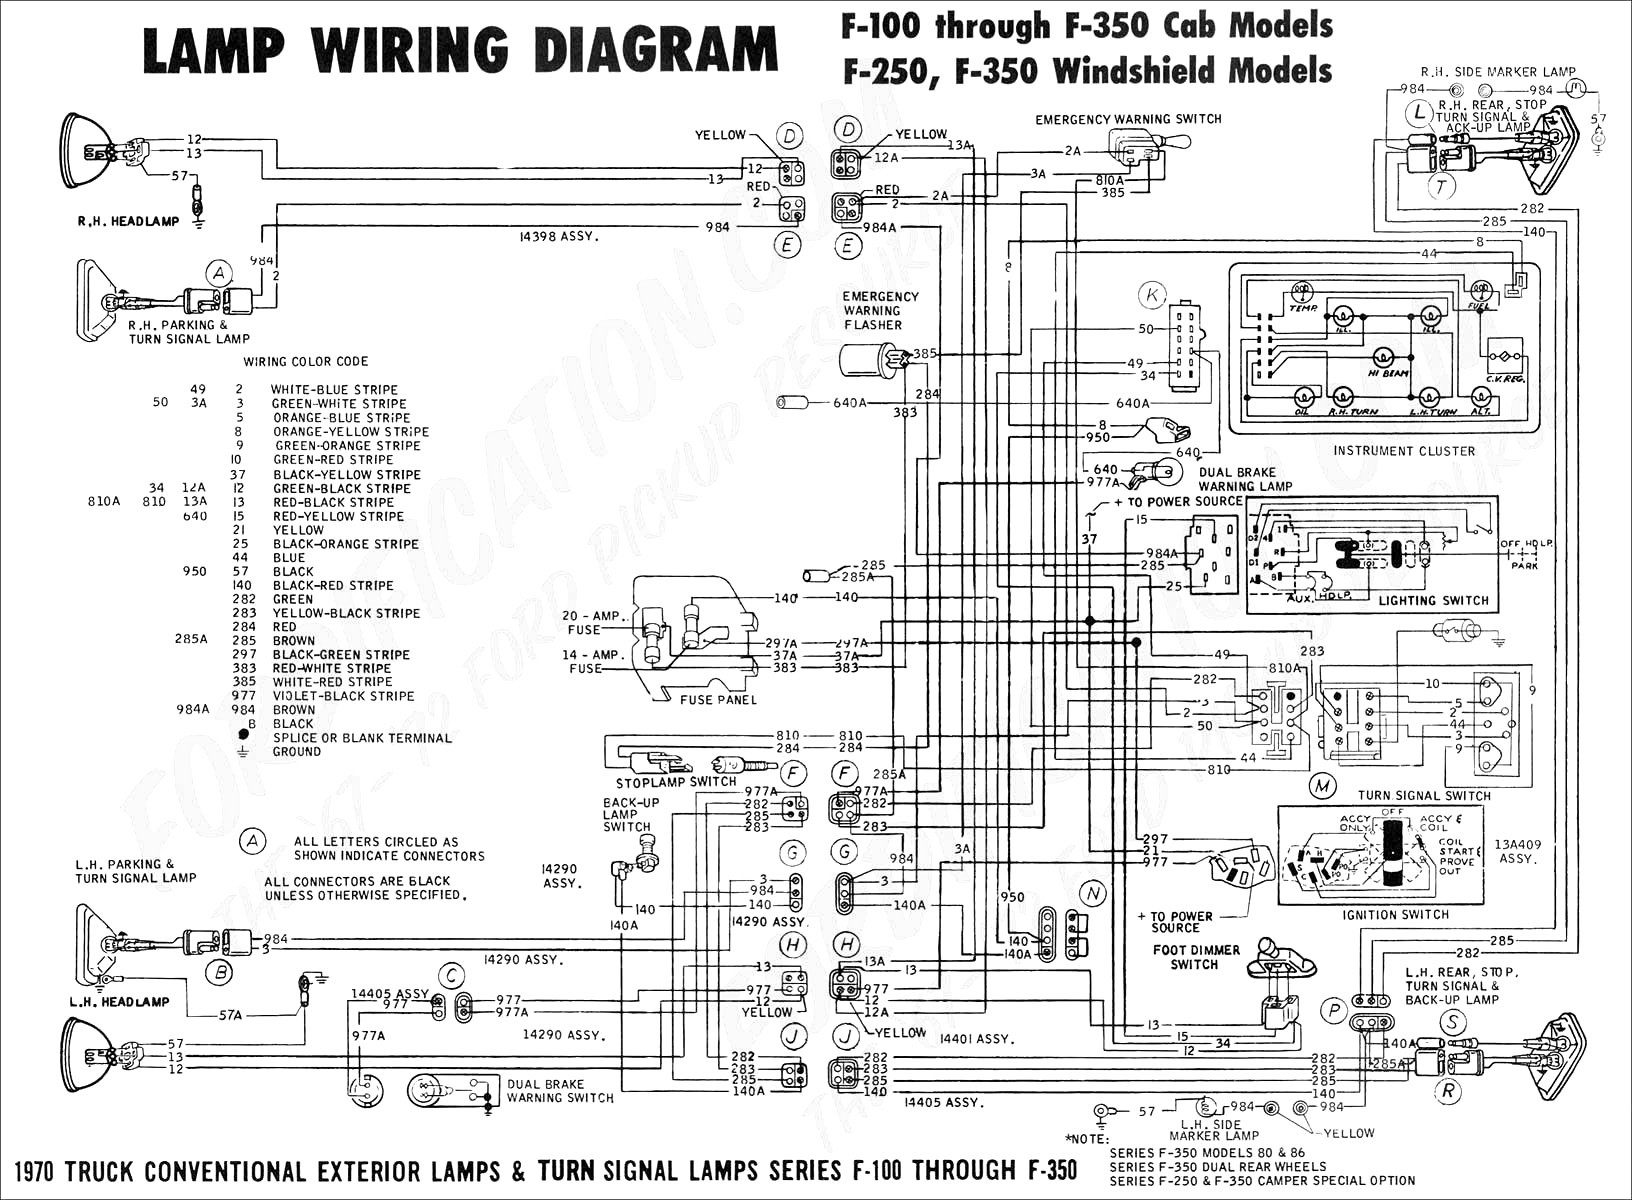 Ford Plug Wiring Diagram | Wiring Diagram - 2001 Ford Mustang Spark Plug Wiring Diagram